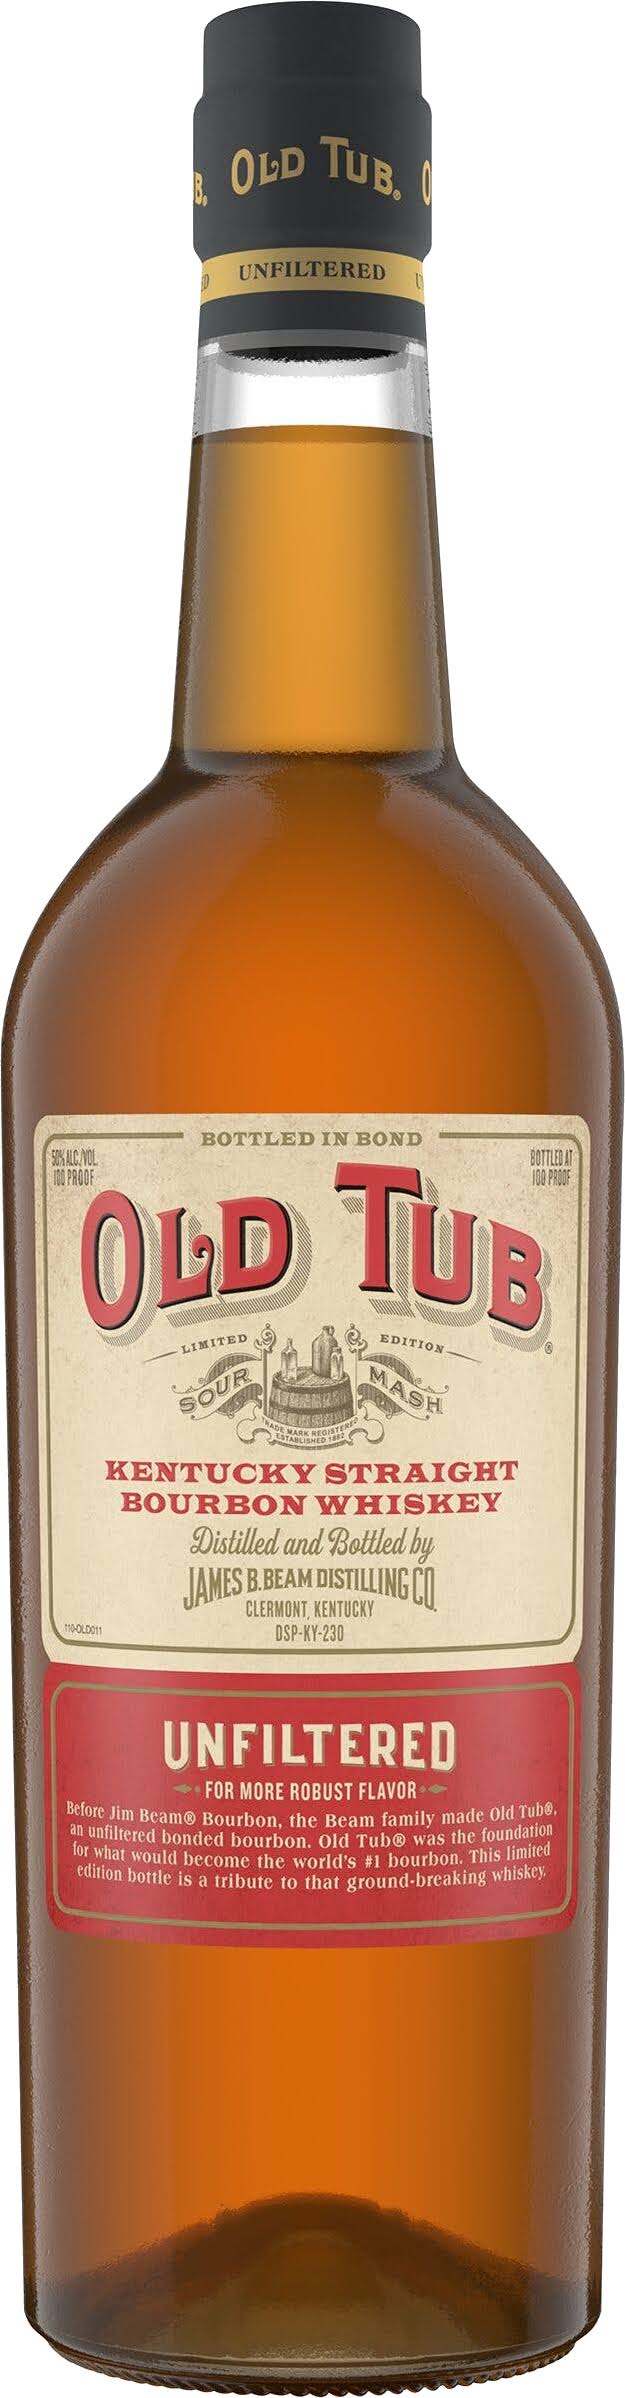 Jim Beam - Old Tub - Kentucky Straight Bourbon Whiskey 75cL